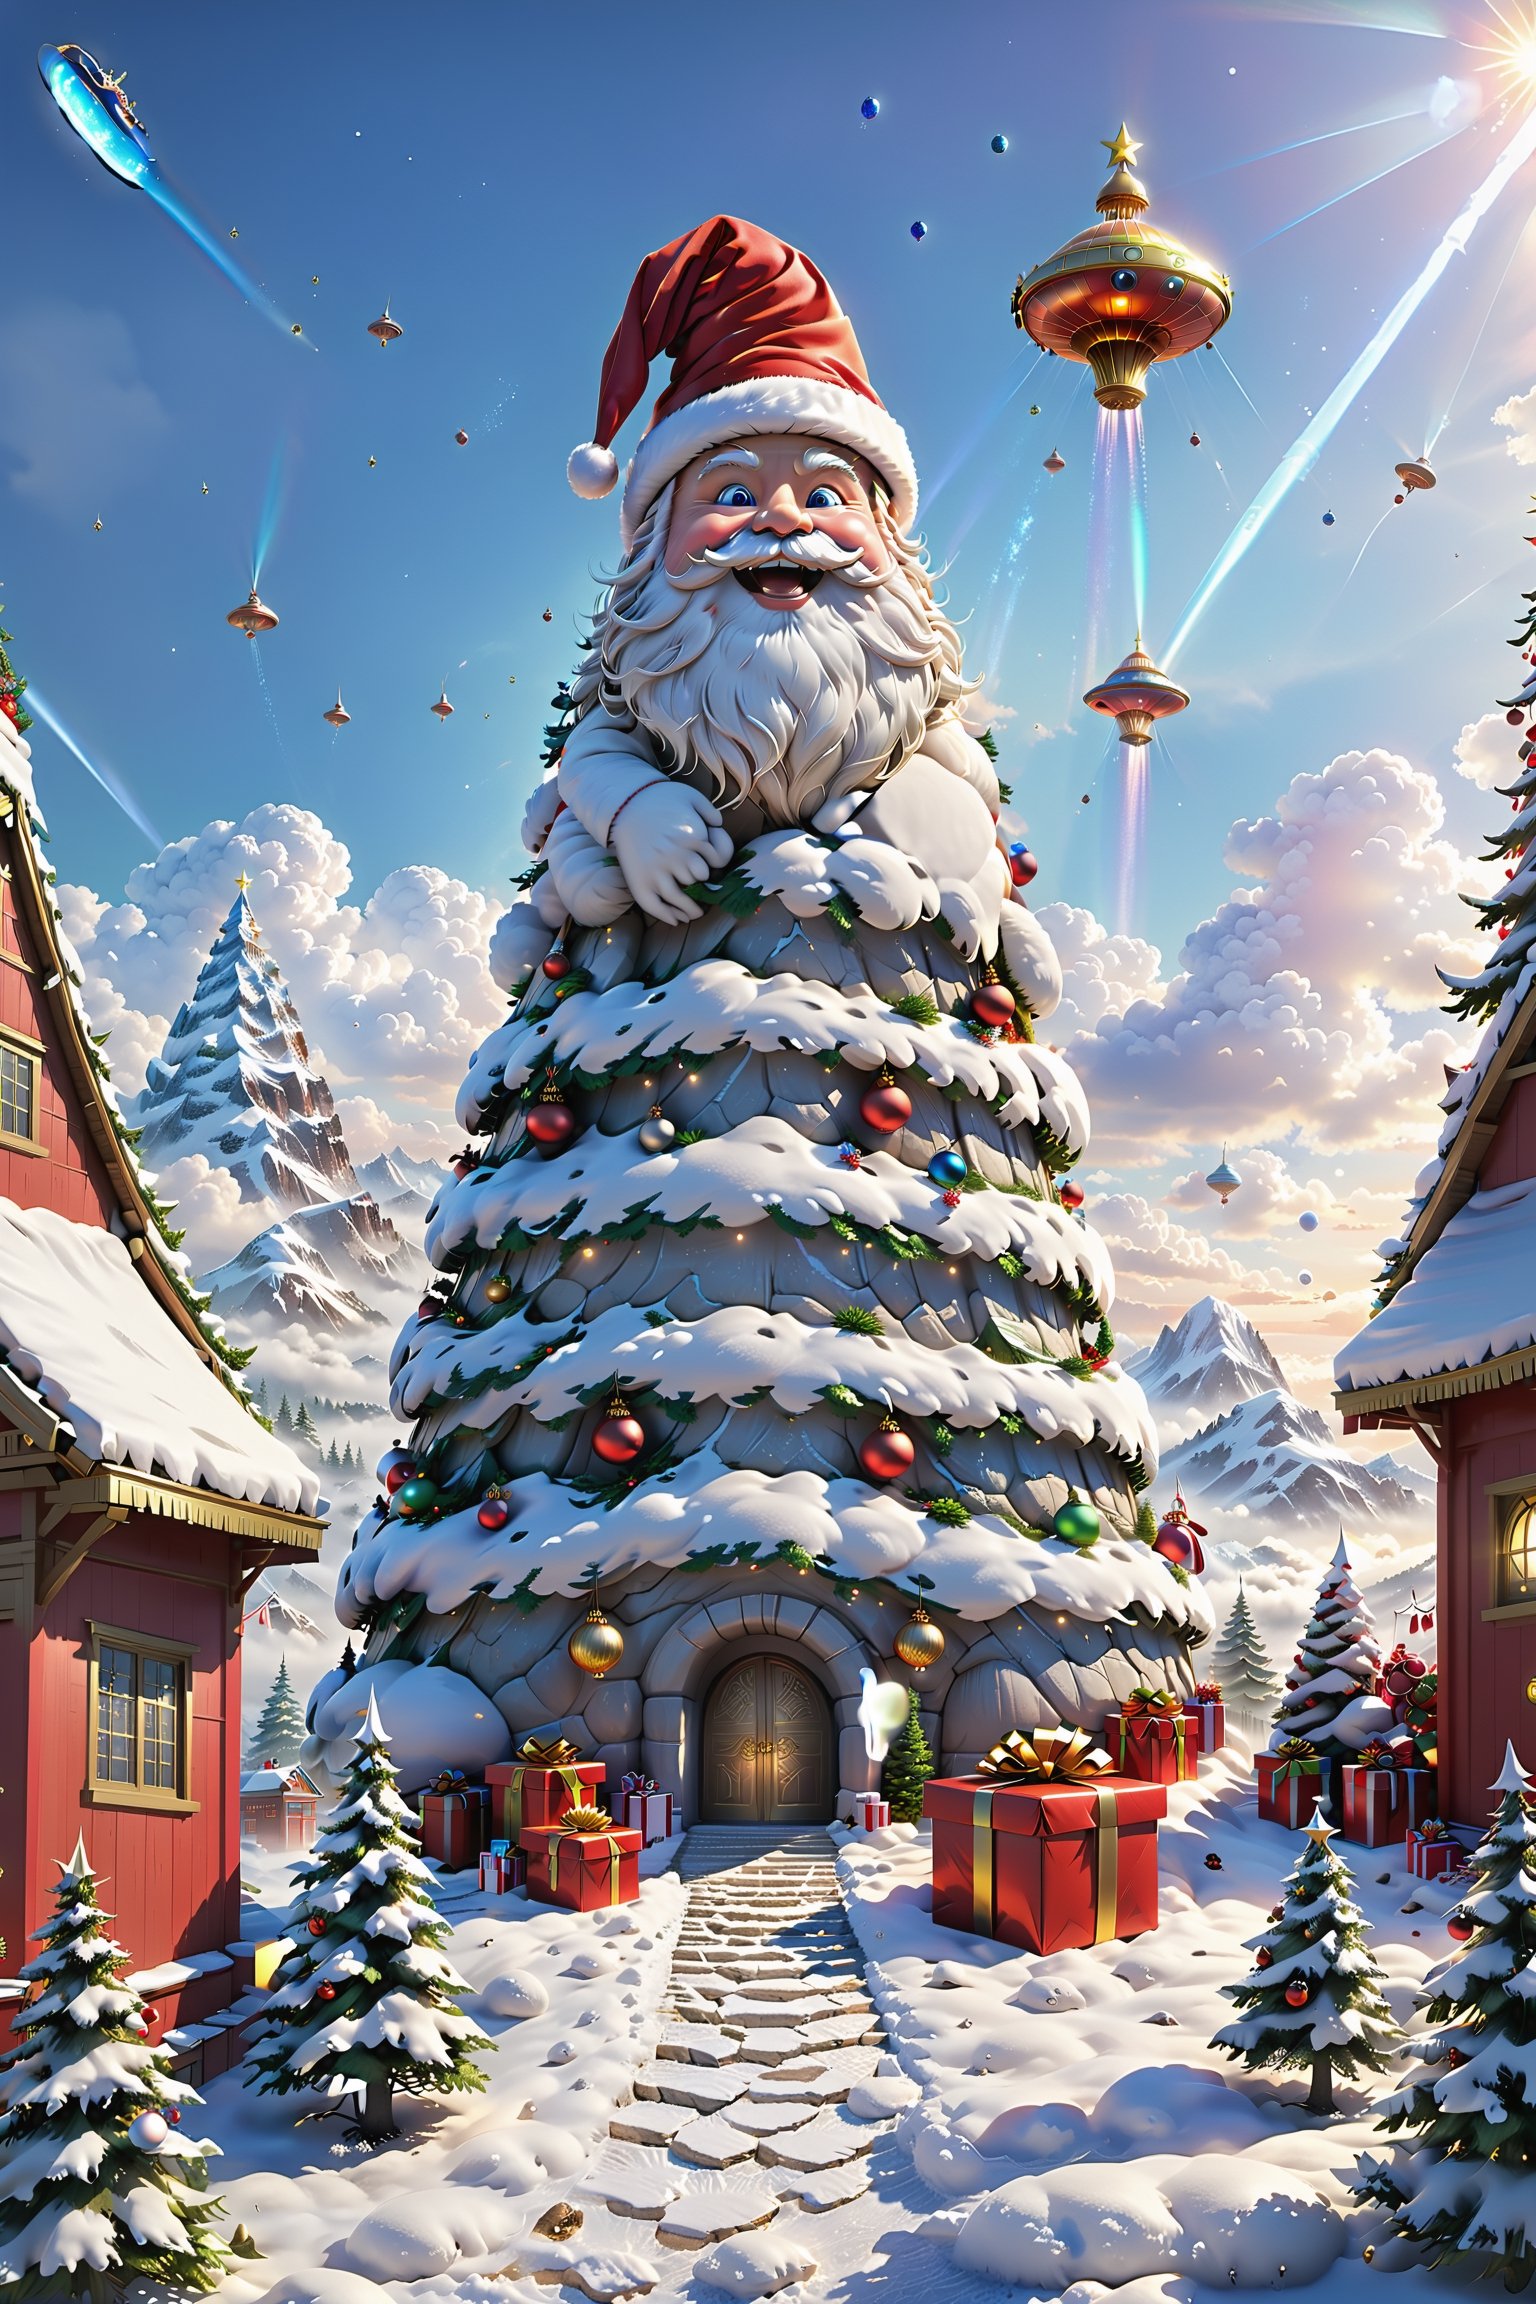 
在这个科幻而异想天开的场景中,圣诞老人骑着一架炫酷的UFO,将传统的圣诞形象与未来科技相融合,呈现出一种前所未见的奇幻画面。

UFO底部可能点缀着彩灯,发出五彩斑斓的光芒。UFO的外观可能装饰着圣诞图案,如雪花、礼物盒子等,为这架太空飞船增添了一份节日的氛围。或者,UFO周围还环绕着一圈璀璨的圣诞彩带,如同一道飘逸的光环。

圣诞老人身着时尚的宇航服,头戴带有星星图案的圣诞帽。他坐在UFO驾驶舱里,手中握着类似飞船操纵杆的礼物袋,表情愉悦而兴奋,似乎正准备启程为全球的孩子送去圣诞礼物。

周围可能是一片星空和太空中的星云,展现出一种宇宙般的壮丽景象。或者在远处,有一些其他的飞行器,如彩色的礼物飞船或圣诞火箭,一同装点这个太空舞台。

整个画面充满了科技感与创意,展现了未来圣诞的一种幽默而奇妙的想象。
The giant towers over the clouds, clad in Christmas decorations, with a huge red Santa hat flopping over his head, and probably covered in colored lights and gift boxes, adding color to the scene. Santa Claus sits on the giant's shoulders, waving a special giant Christmas stocking in his hand, as if delivering Christmas wishes to children all over the world.

The expression on the giant's face may be jolly and warm, complementing the pleasant atmosphere of Santa Claus. His body may also be adorned with some Christmas wreaths, and his huge paws step on a patch of snow, leaving deep imprints.

The background might be a cold winter day with snowflakes fluttering in the air. Or there may be some other Christmas elements around, such as snowmen and Christmas trees, creating a scene full of laughter and blessings.

The whole picture is full of creativity and vigor, combining the image of Santa Claus with elements of pop culture to present an eye-catching fantasy picture.